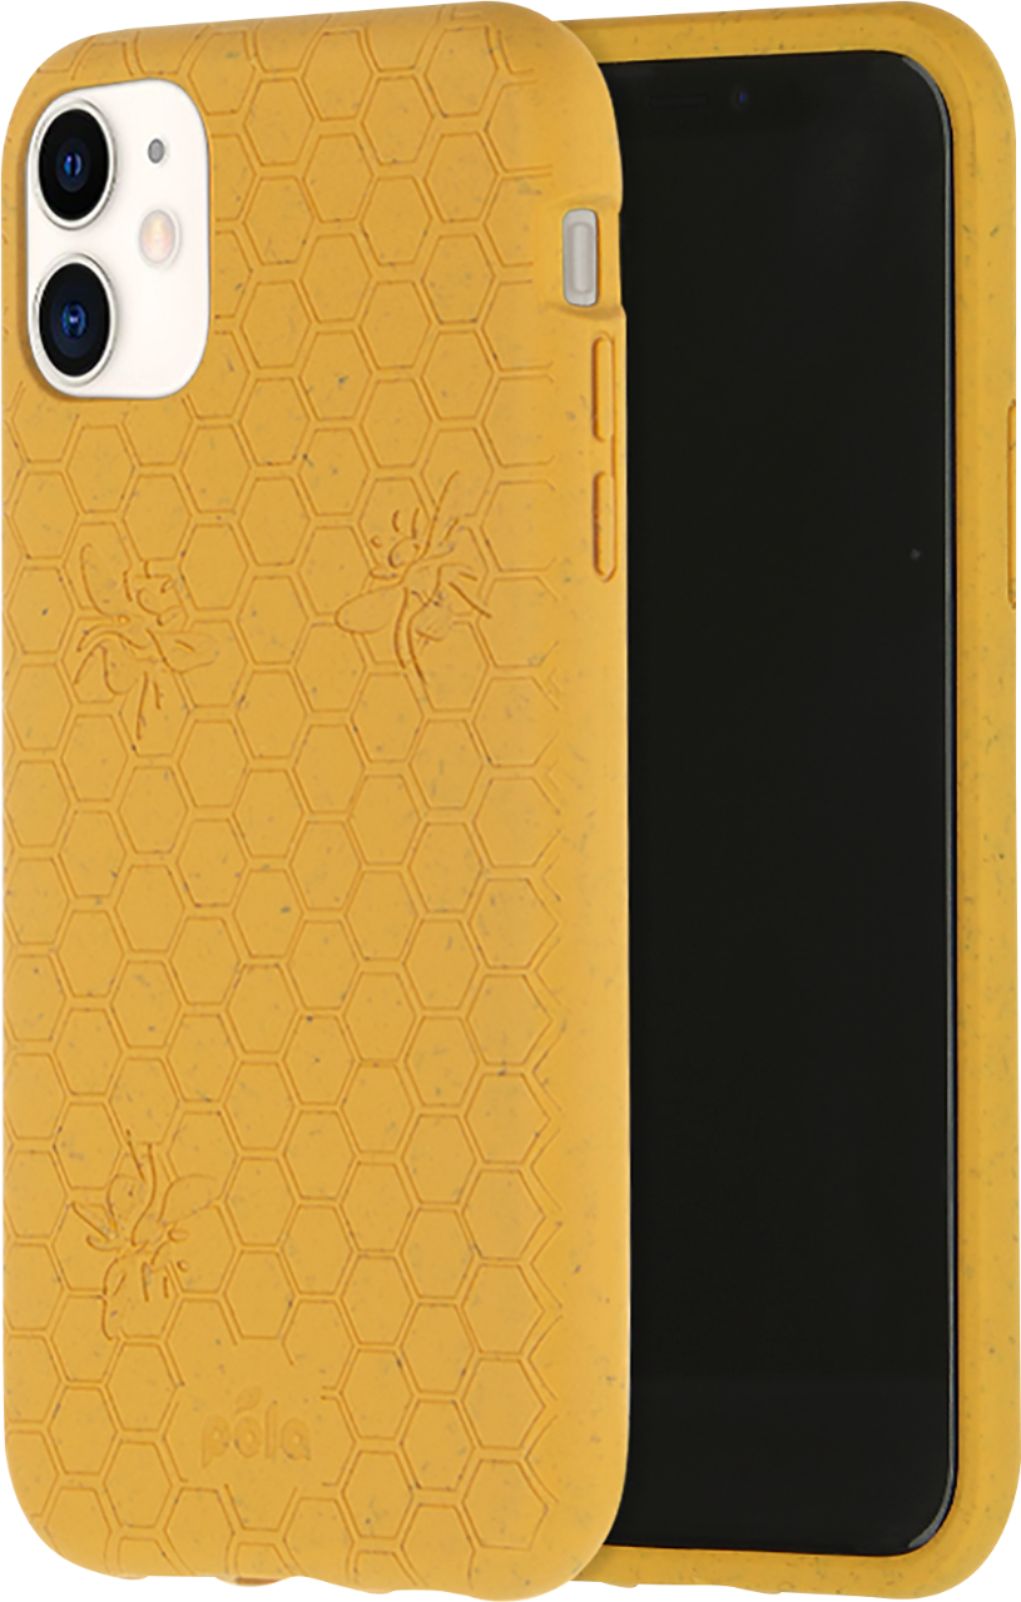 LOUIS VUITTON LOGO GREEN ICON PATTERN iPhone 7 Plus Case Cover